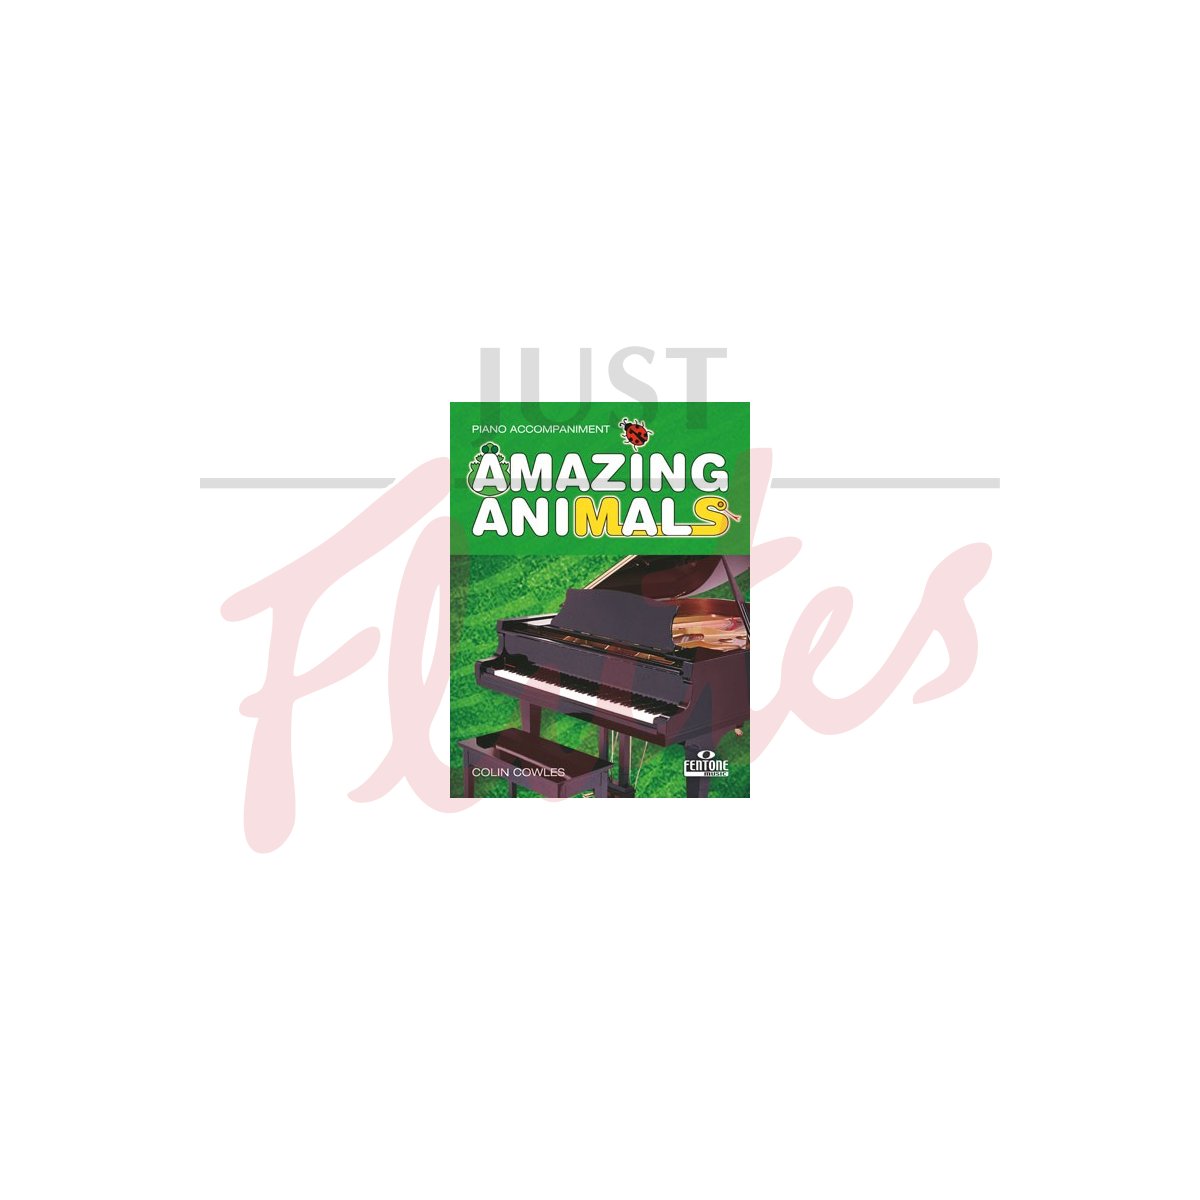 Amazing Animals [Piano Accompaniment]